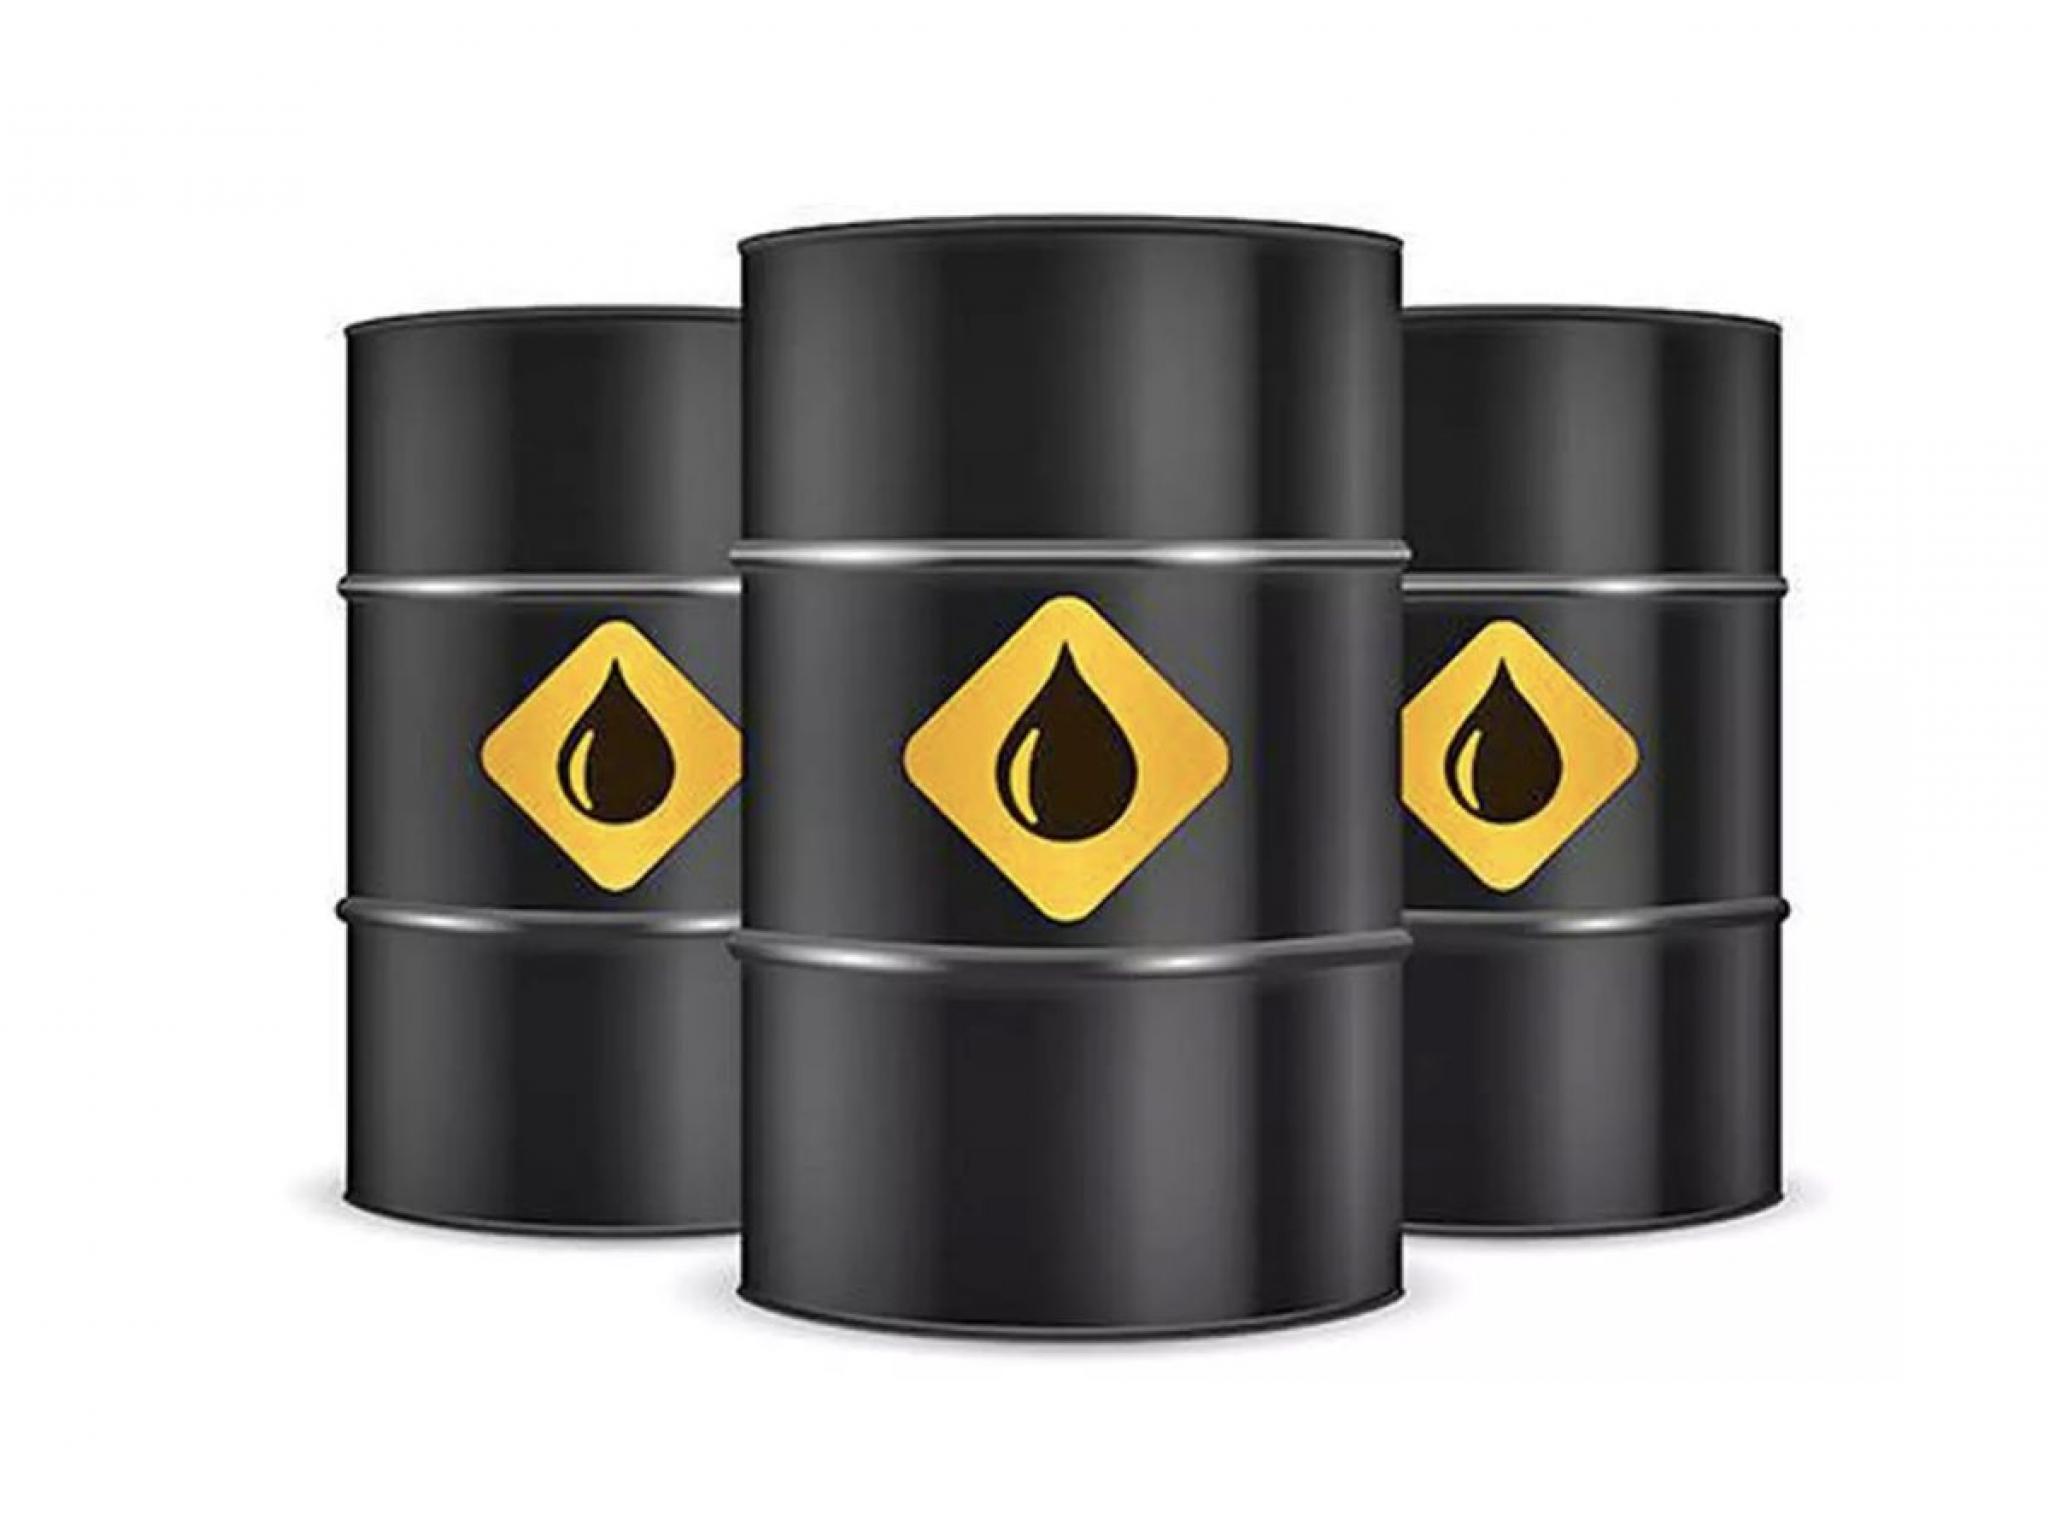  crude-oil-gains-over-2-sp-global-raises-profit-outlook 